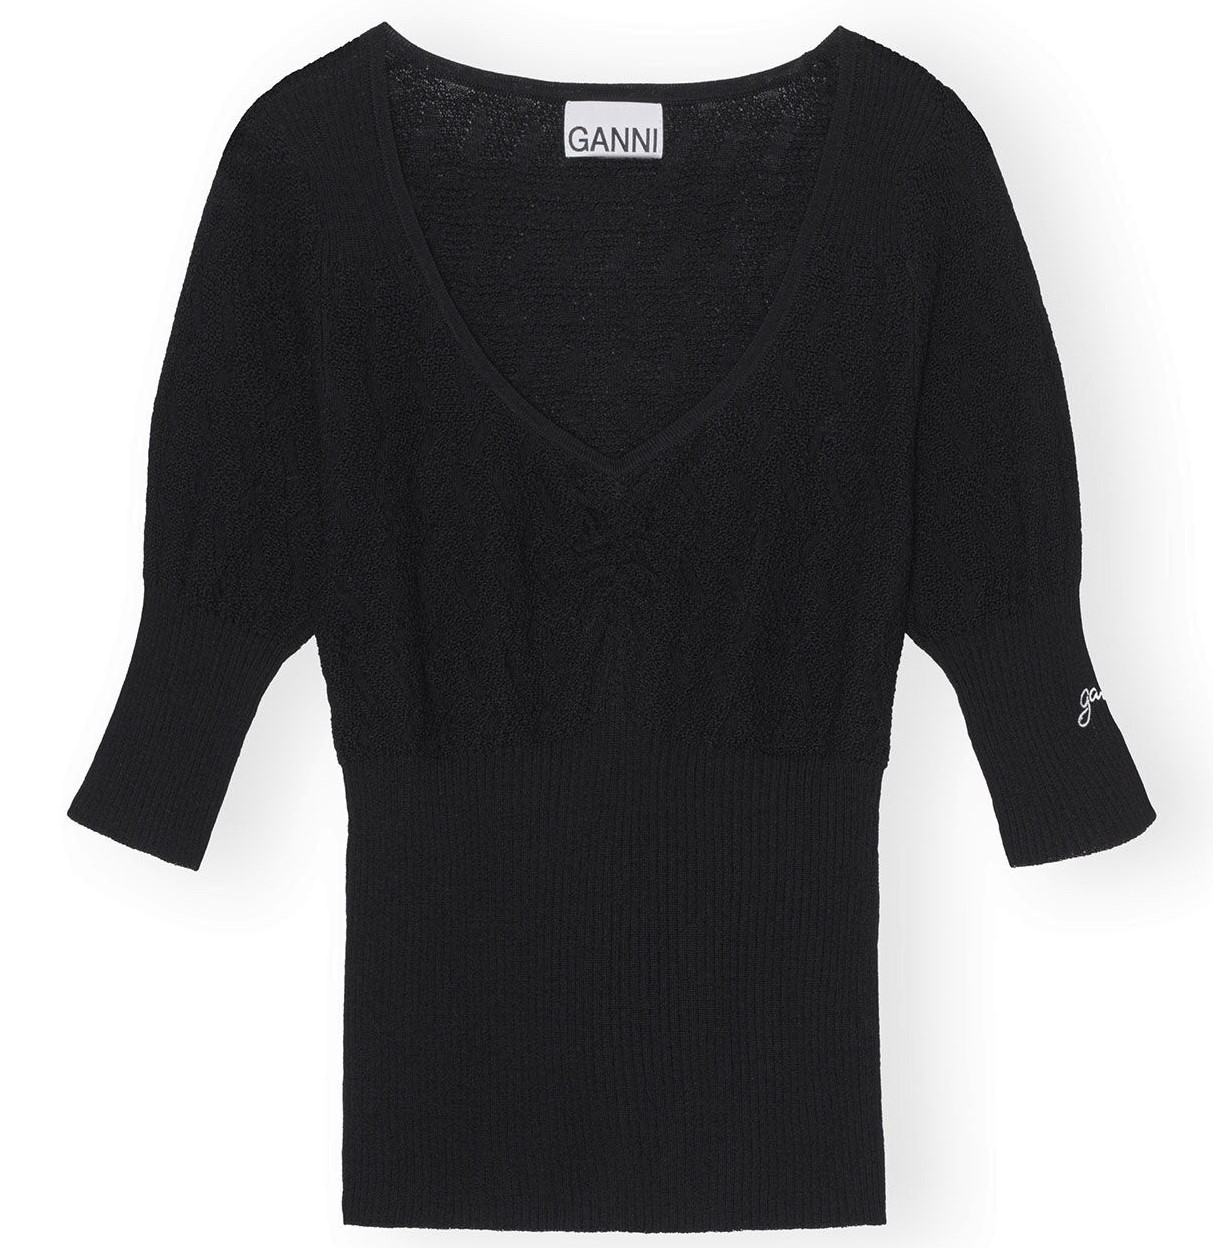 GANNI Merino Knit Pullover in Black M